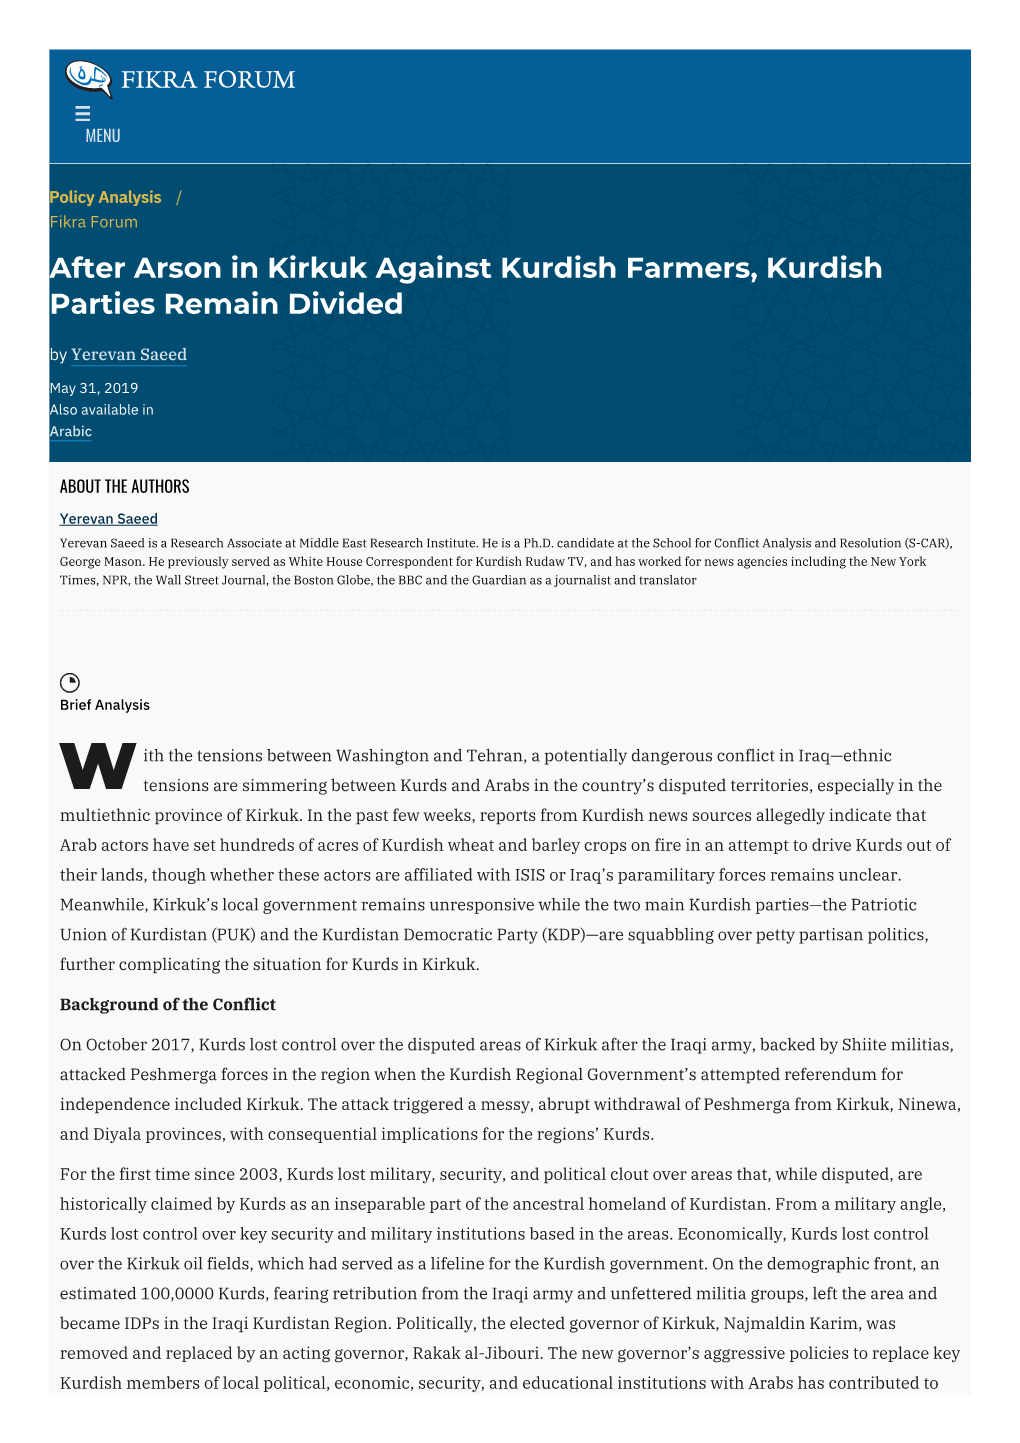 After Arson in Kirkuk Against Kurdish Farmers, Kurdish Parties Remain Divided by Yerevan Saeed